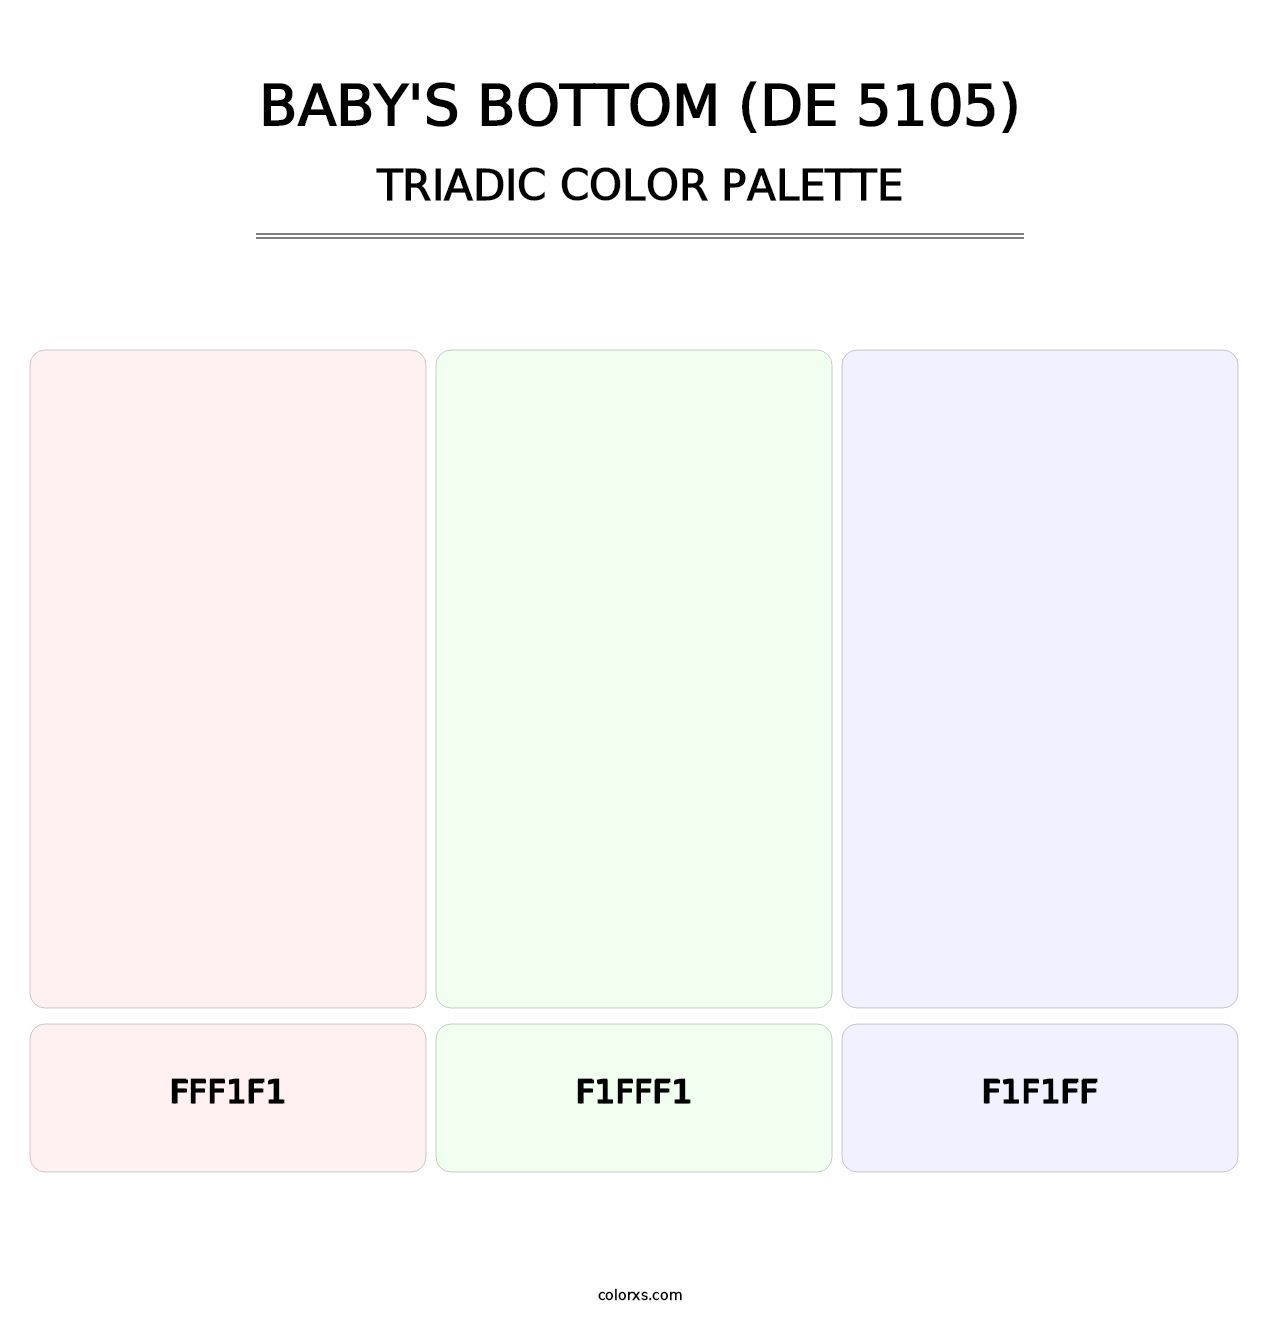 Baby's Bottom (DE 5105) - Triadic Color Palette